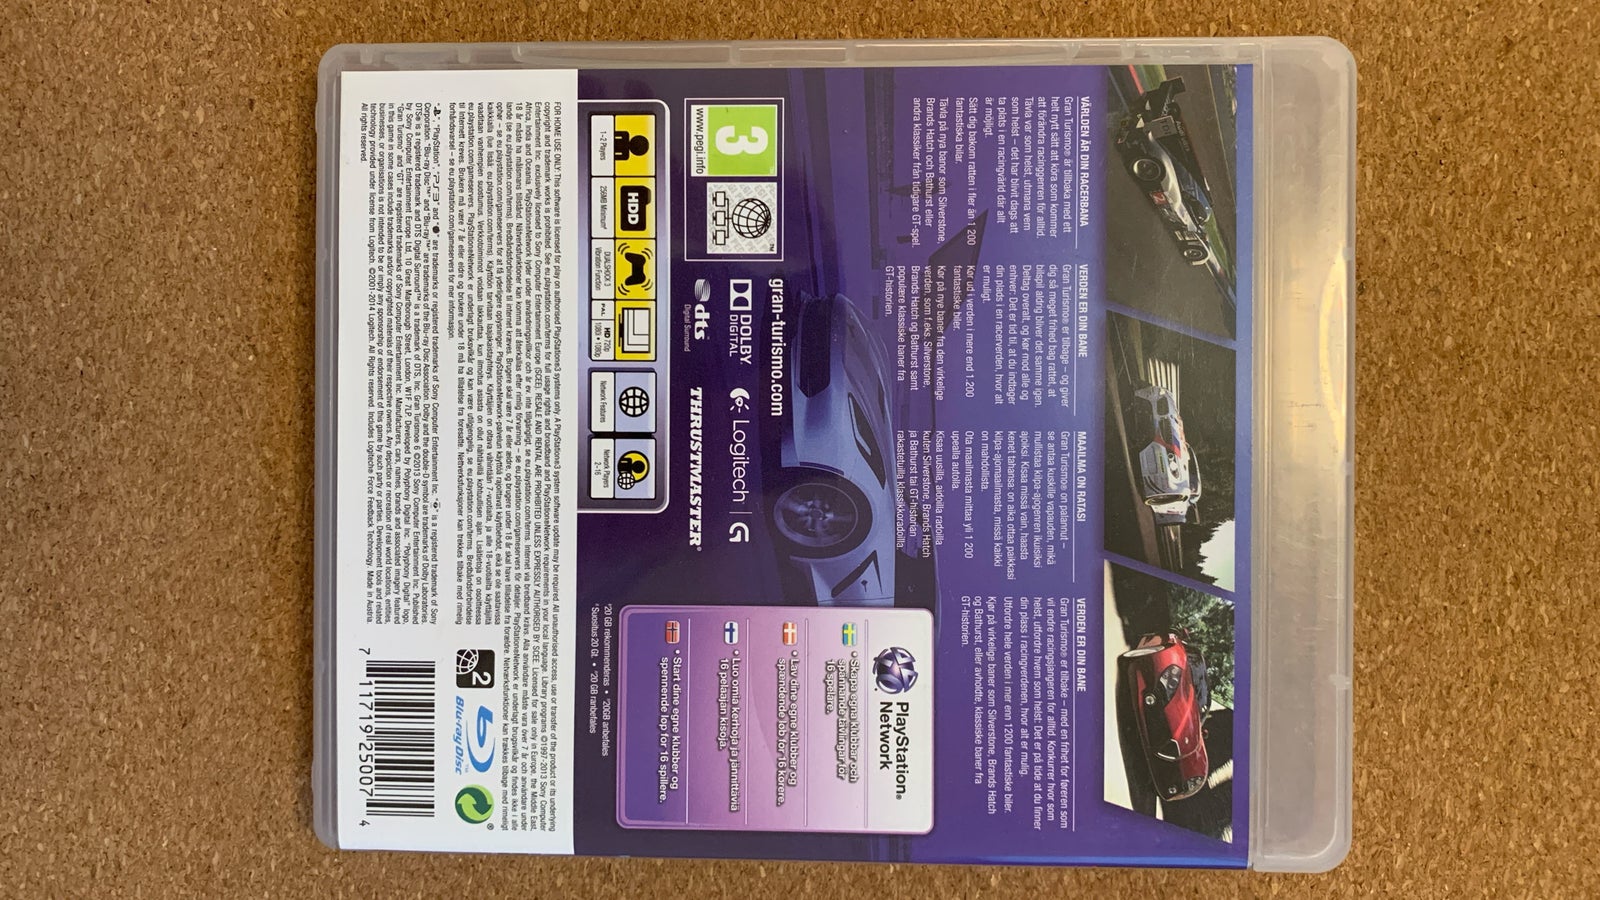 Gran Turismo 6, PS3, racing